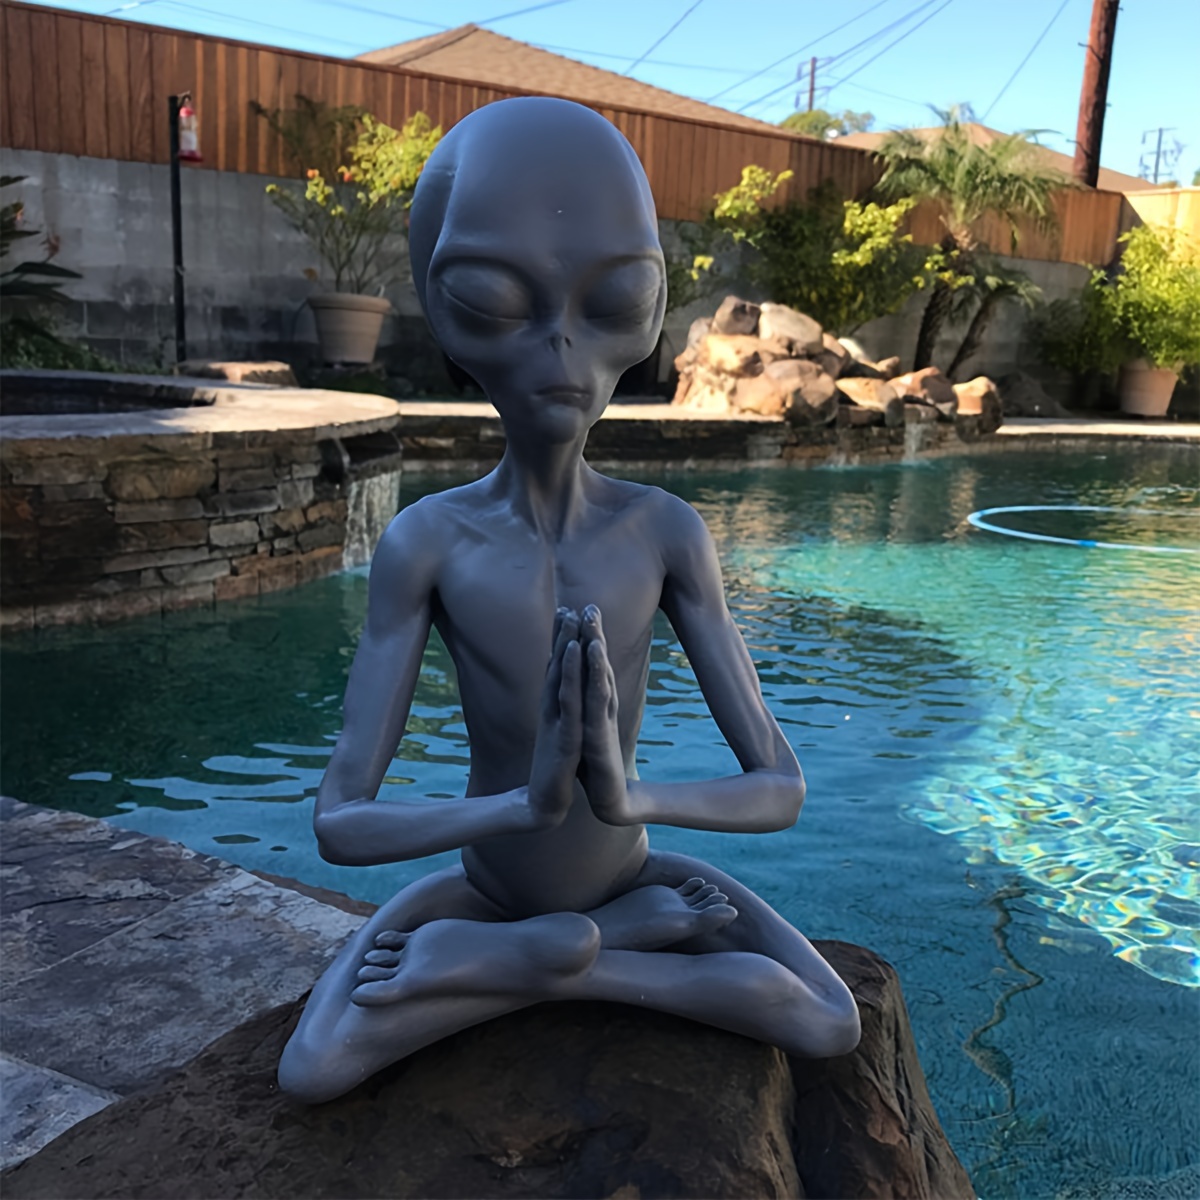 

1pc, Meditating Alien Resin Statue, Ufo Garden Ornament, Outdoor Decor Space Creature Figurine, Mystical Alien Resin Art Piece For Patio, Poolside Decor, And Sci-fi Enthusiasts